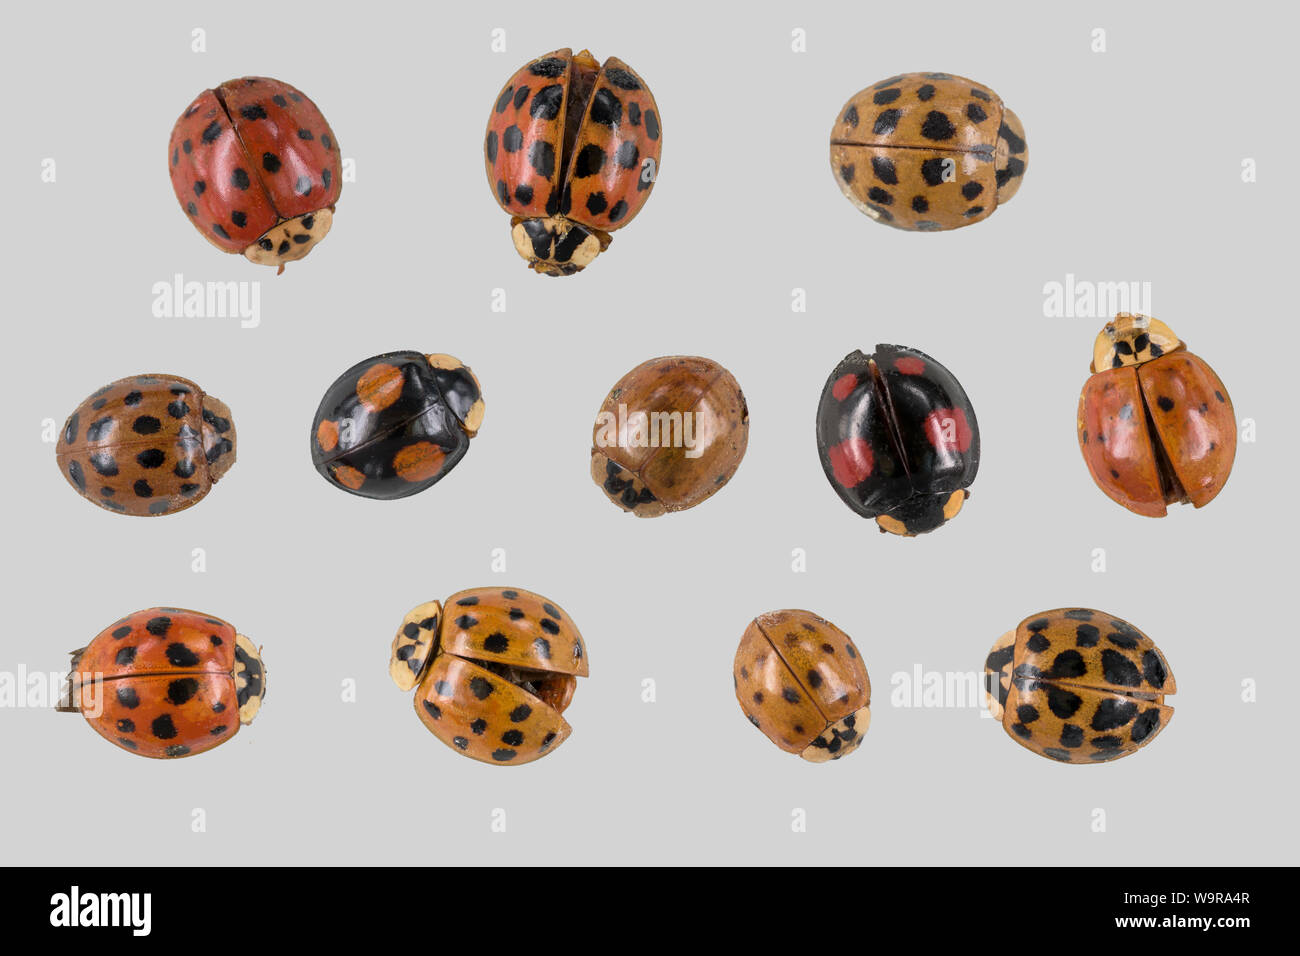 Ladybeetles asiatici, arlecchino ladybeetle, multicolore ladybeetle asiatici, parco naturale Munden, Bassa Sassonia, Germania (Harmonia axyridis) Foto Stock